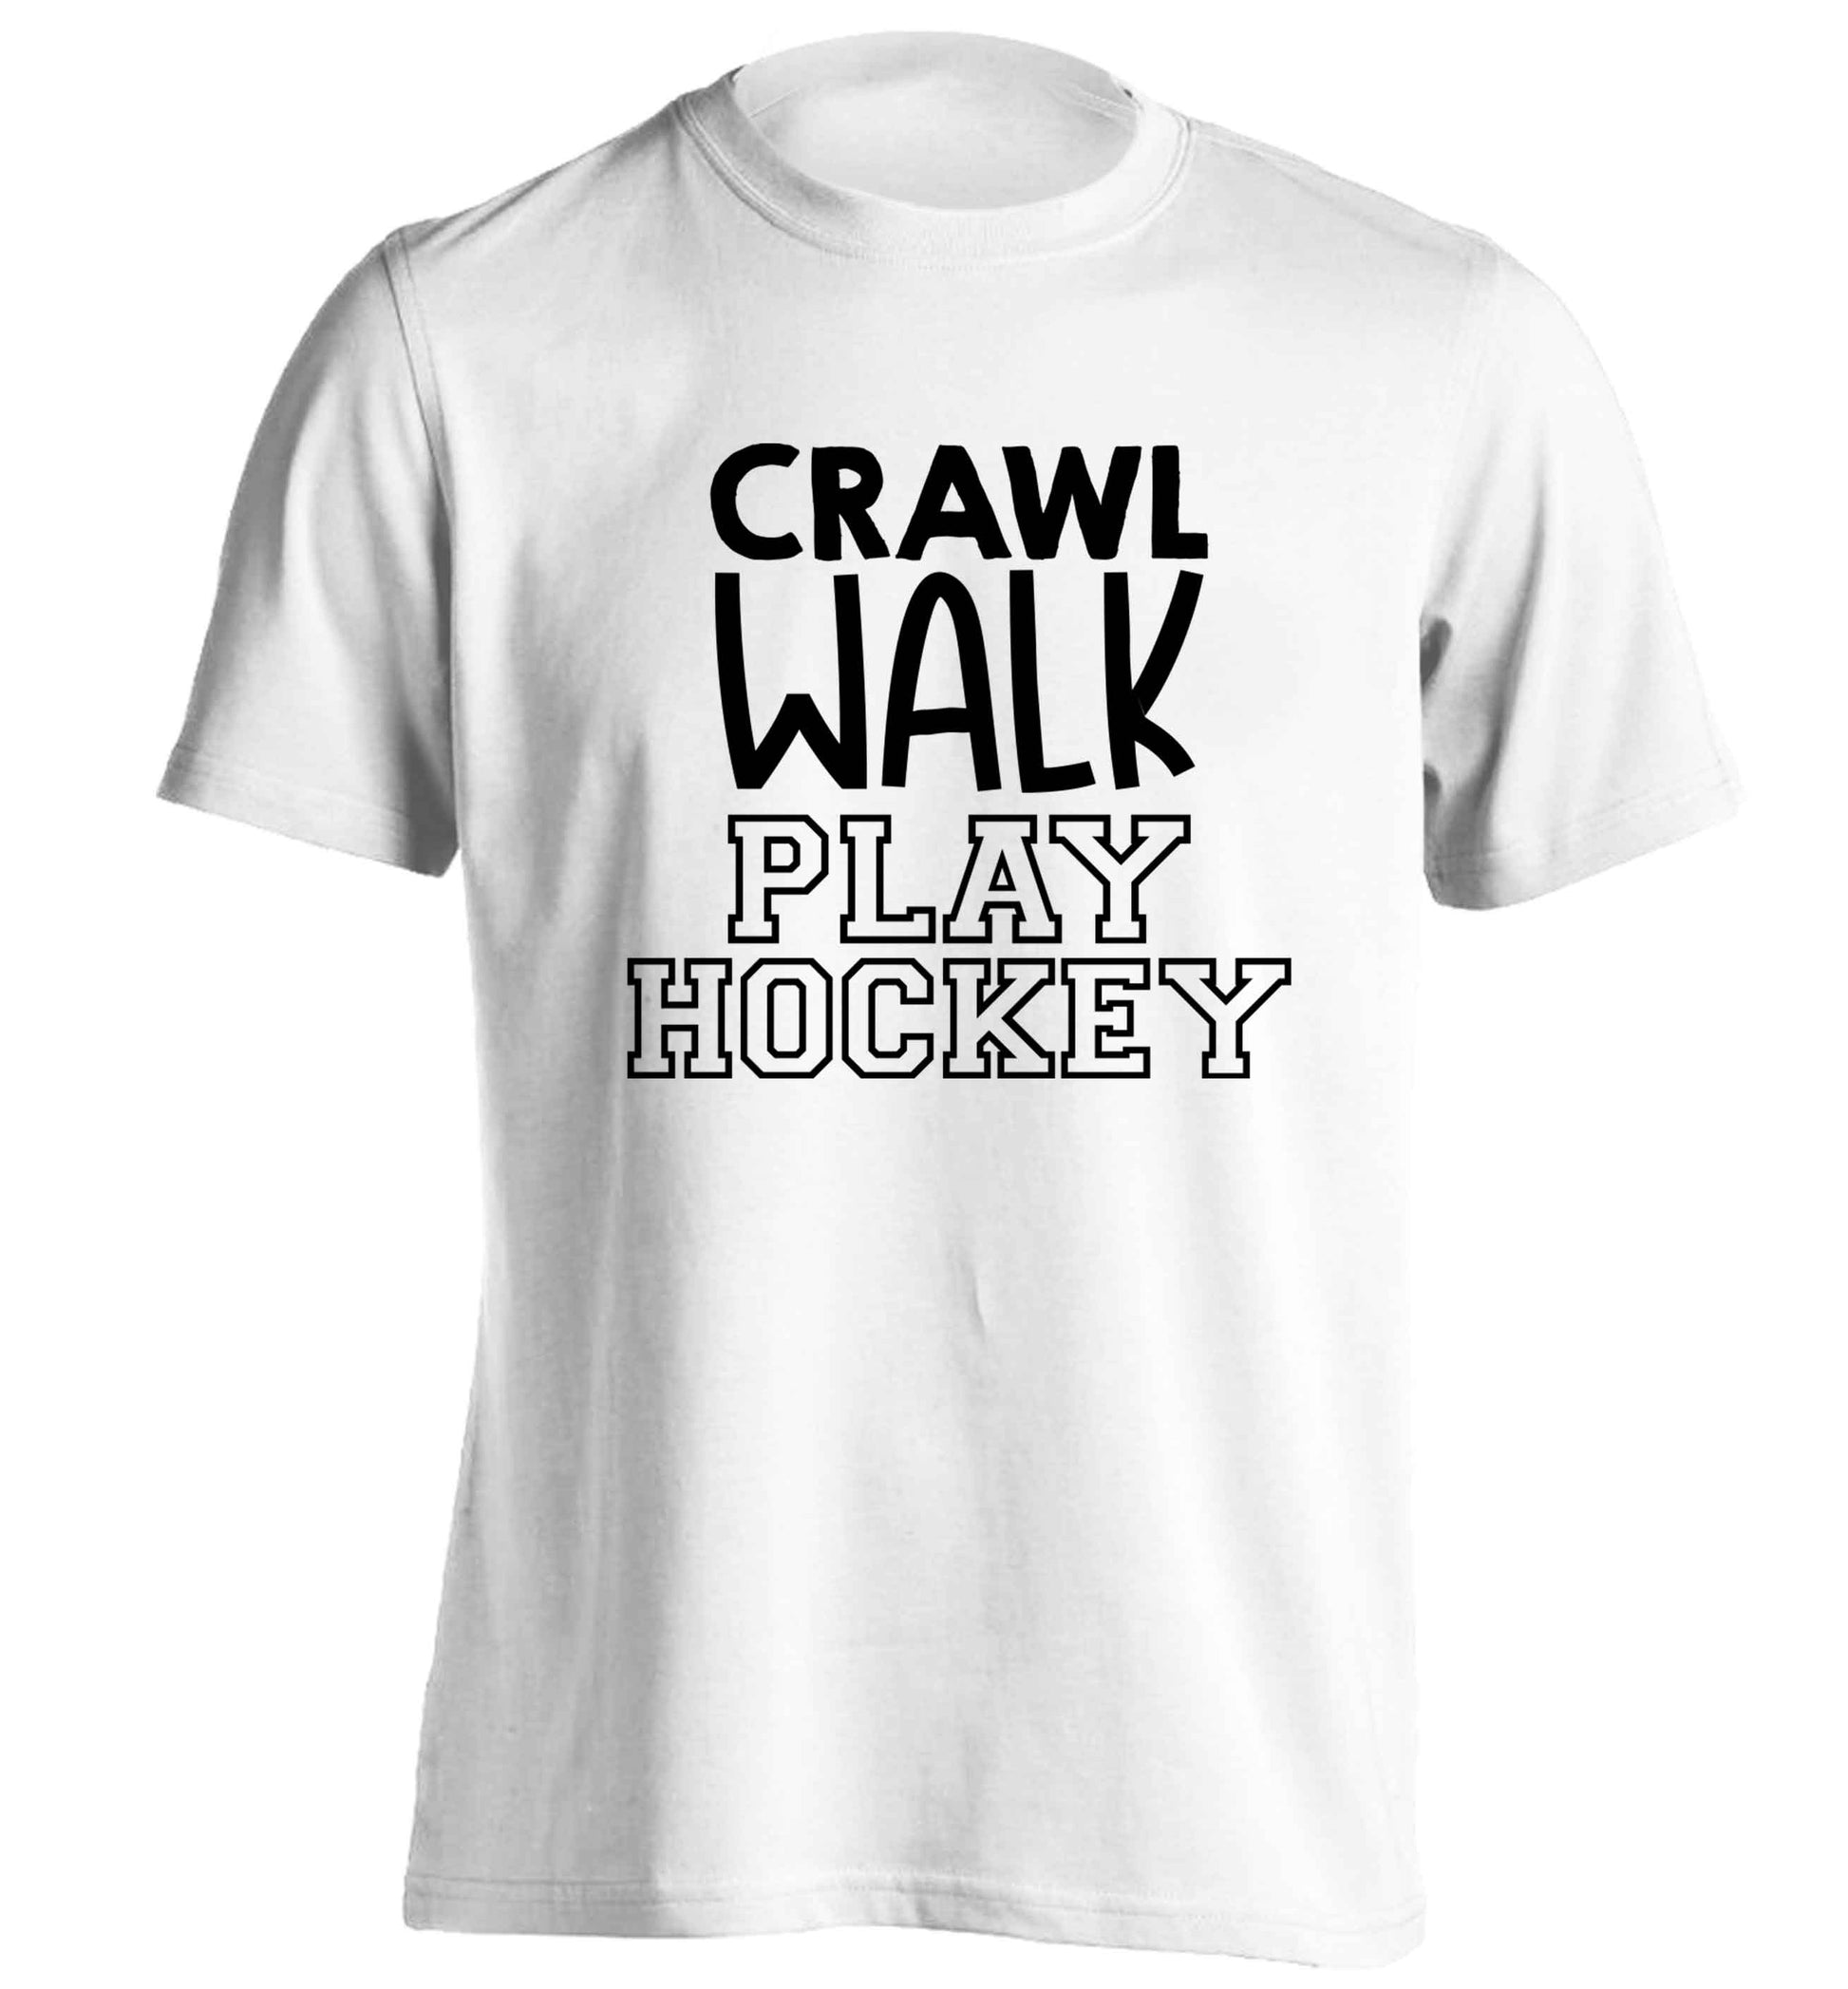 Crawl walk play hockey adults unisex white Tshirt 2XL